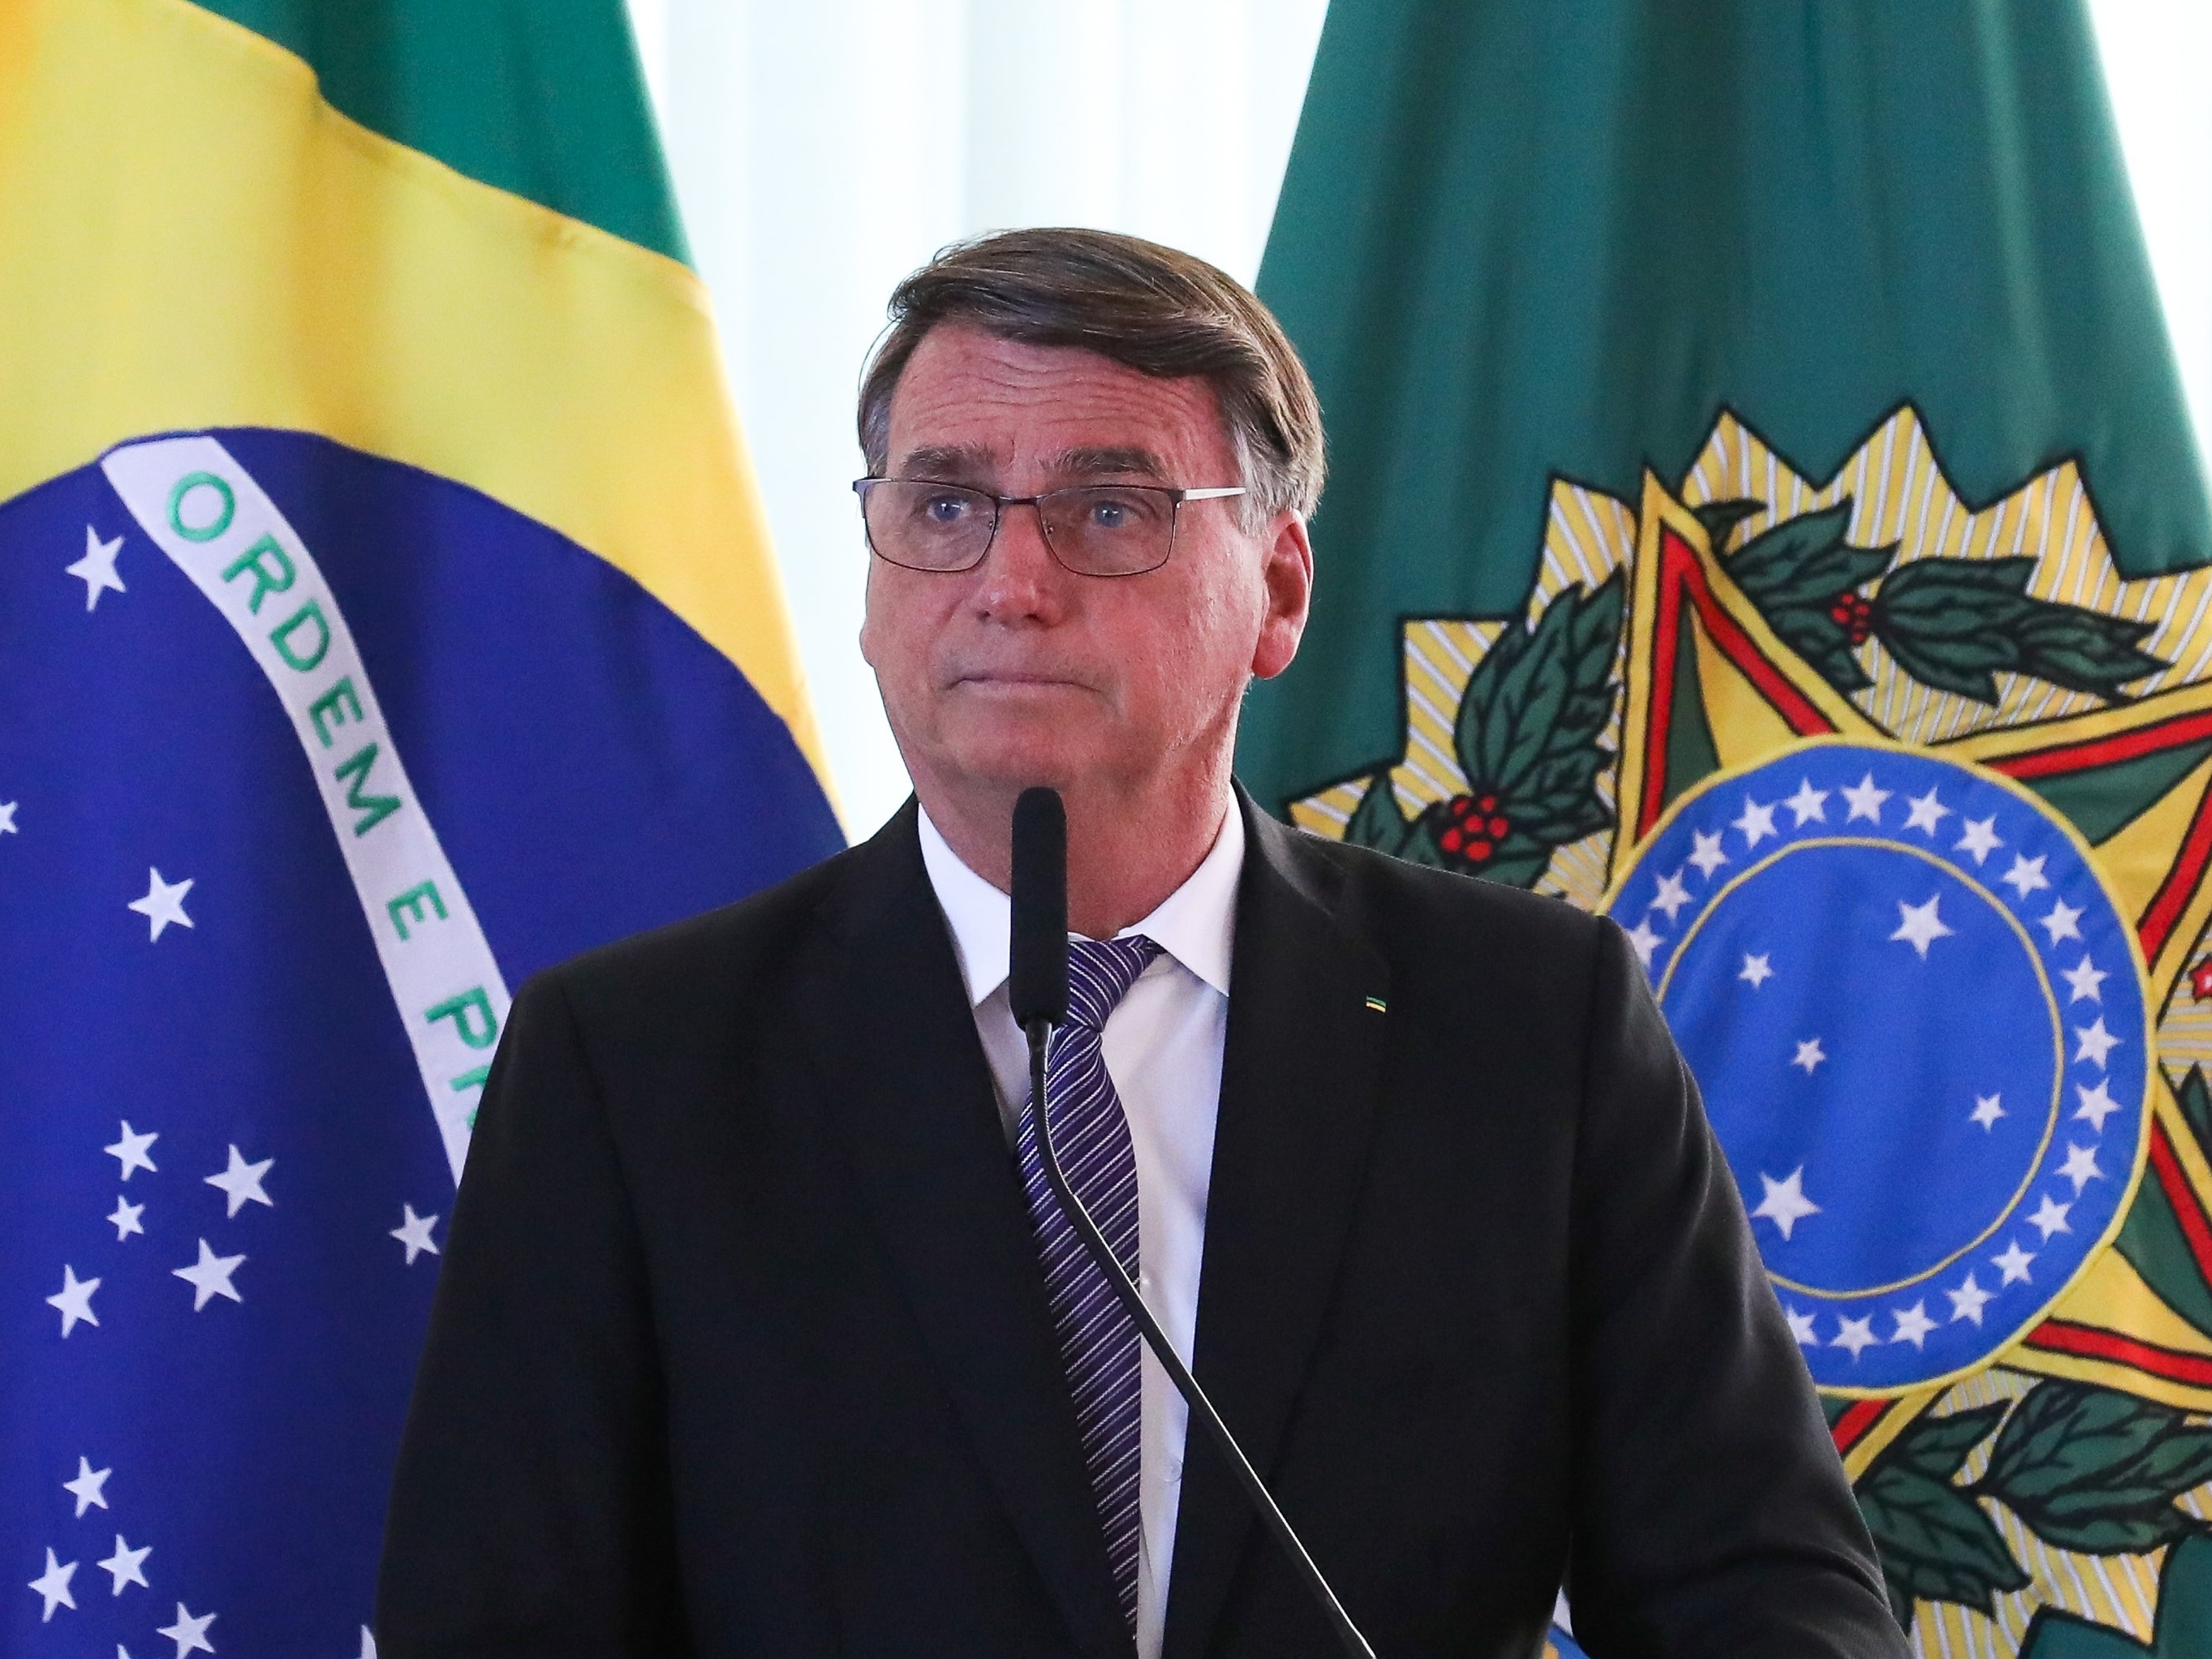 Bolsonaro Terror do PT – Apps no Google Play